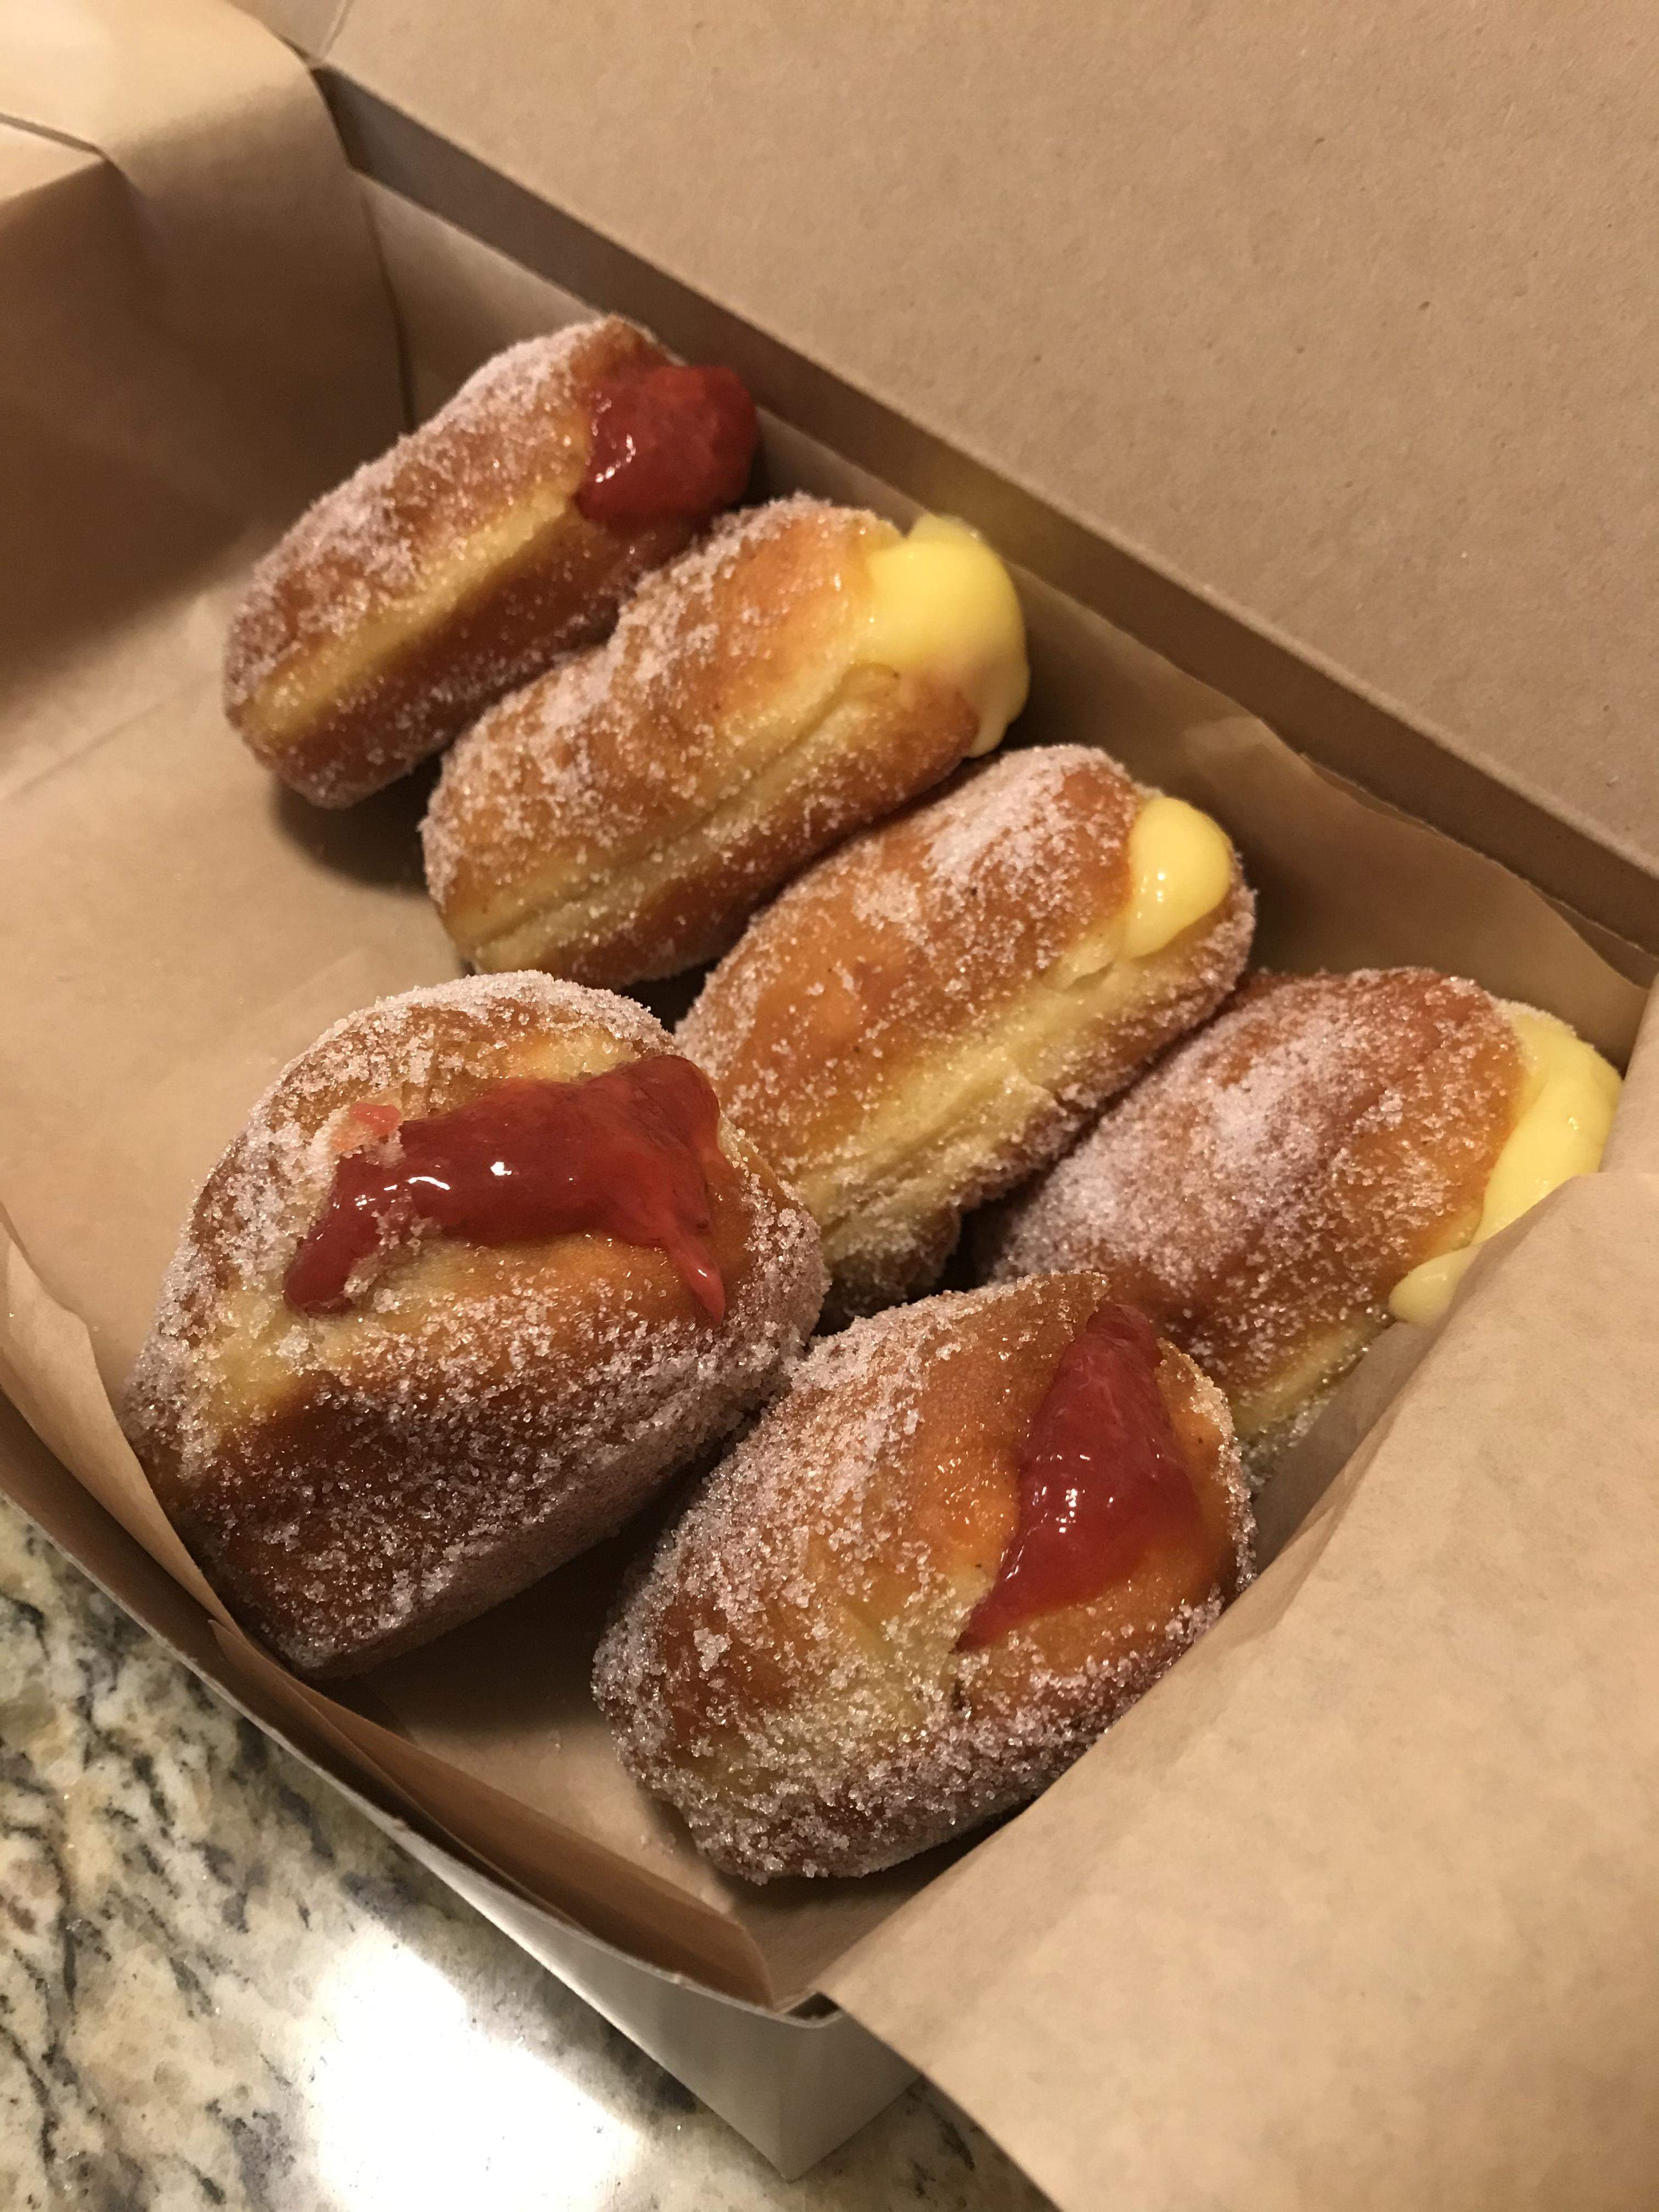 Filled yeast raised doughnuts